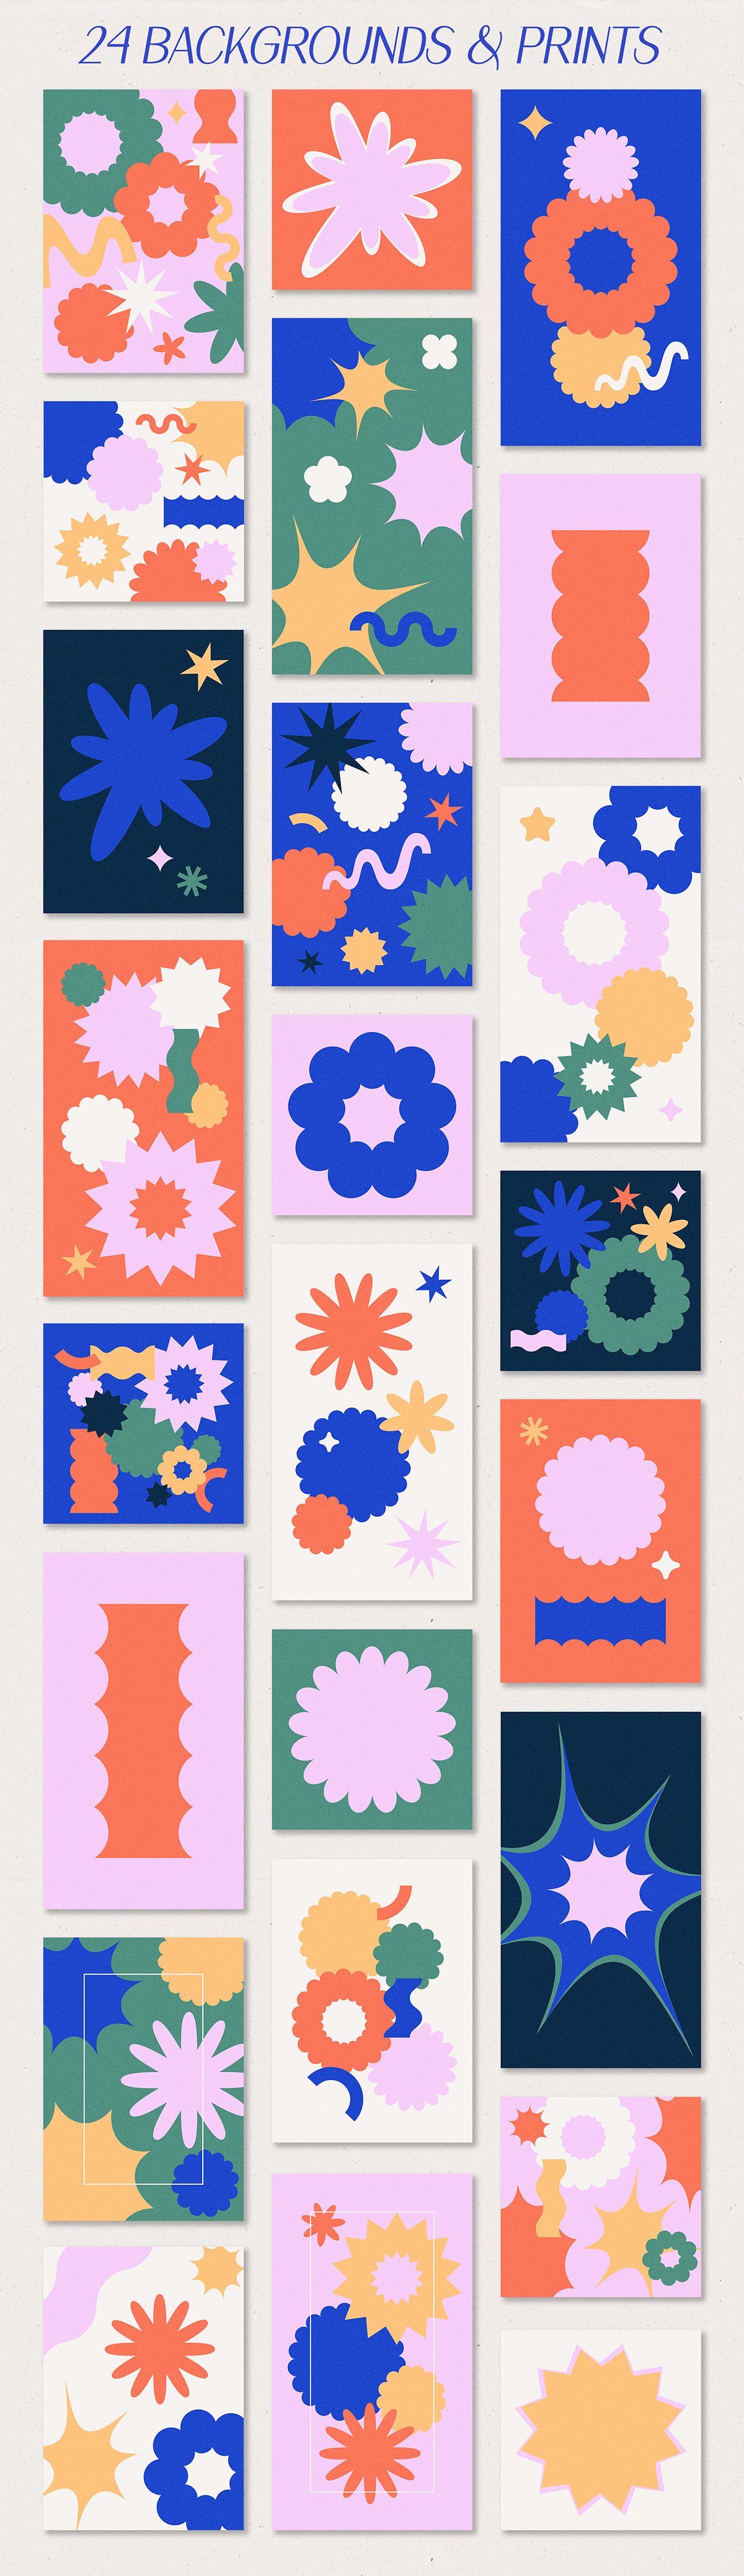 abstract background bright colors geometric pattern Poster Design Retro Socialmedia vector